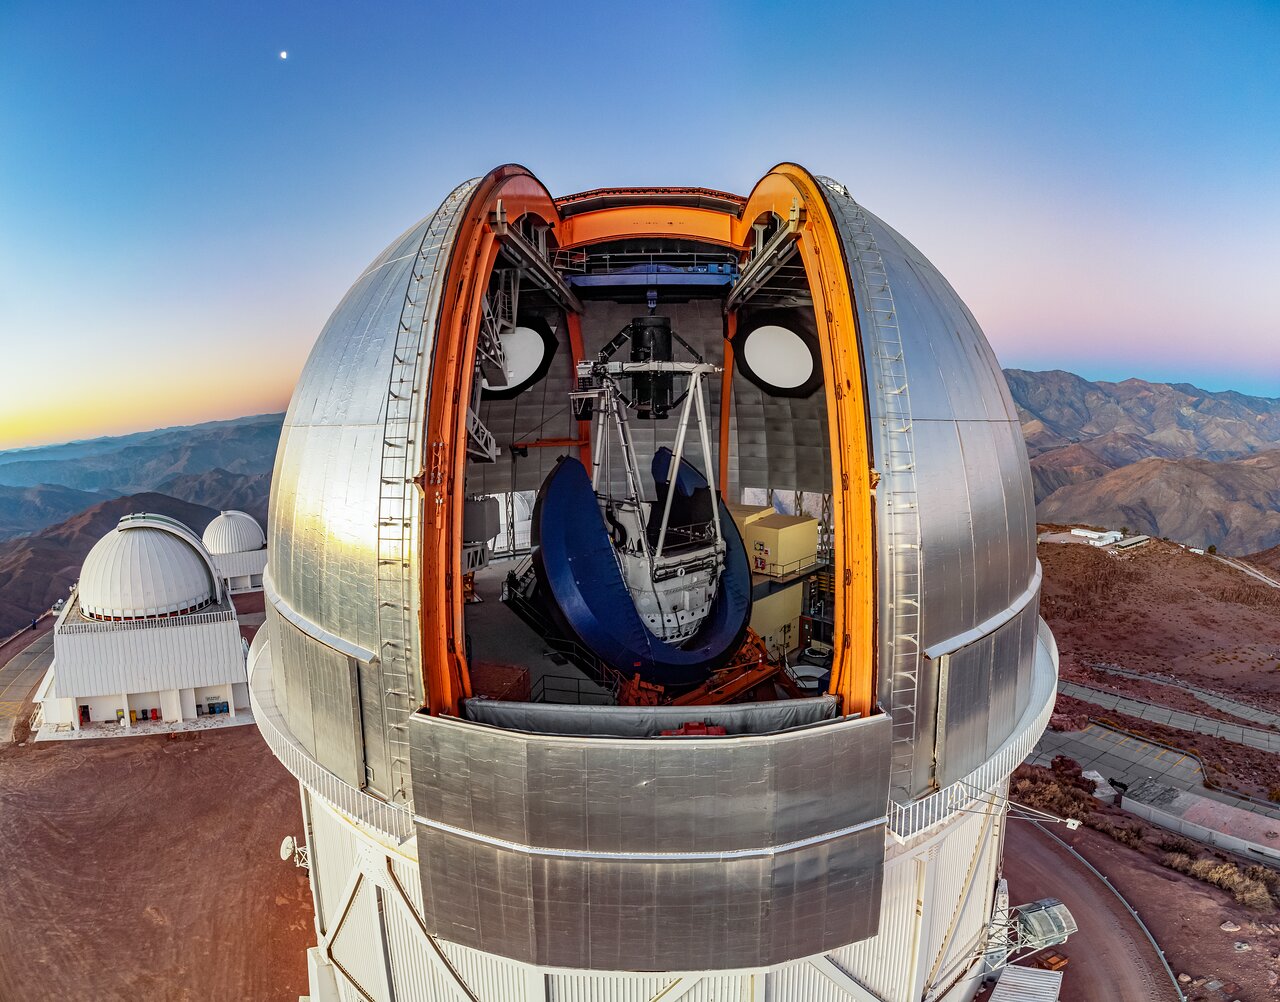 Buy A Star — Carlton Observatory